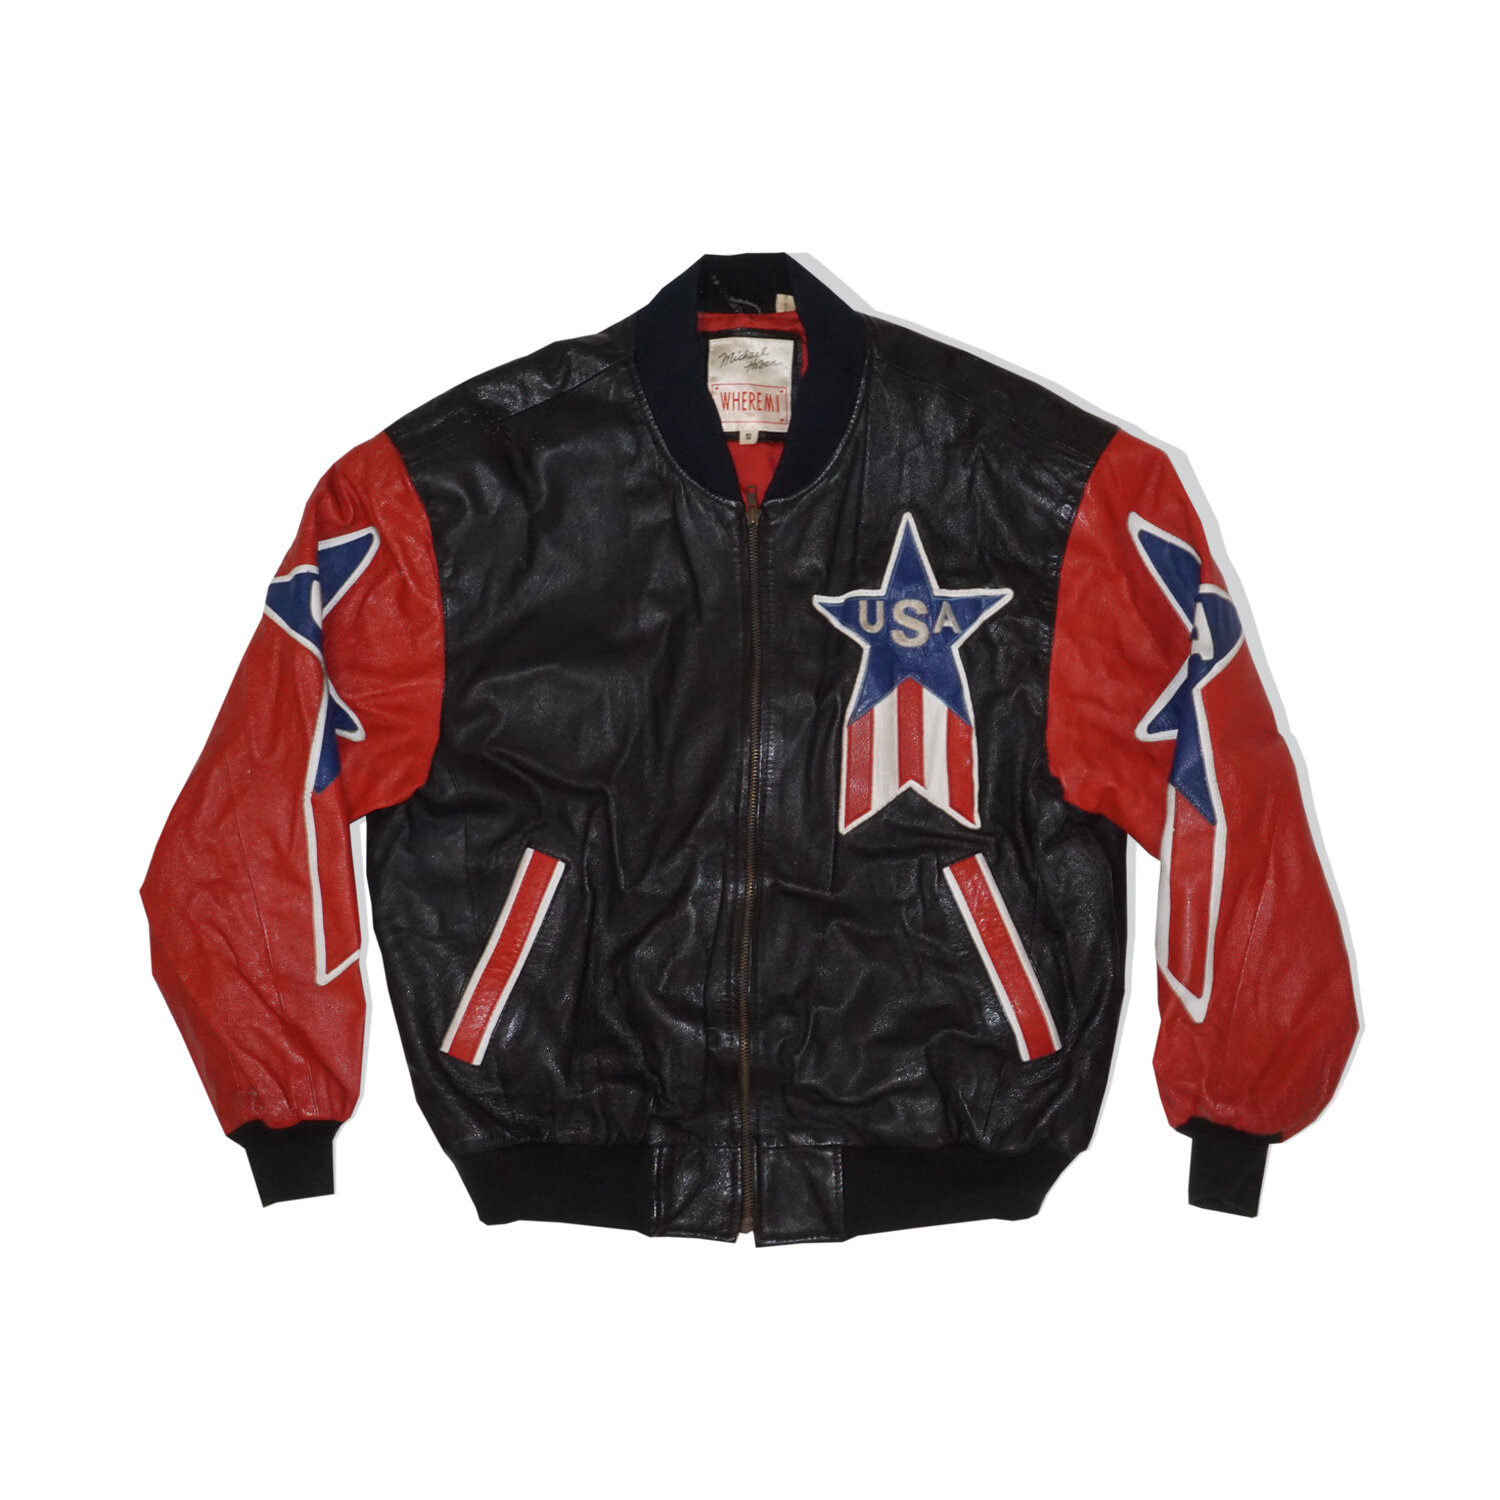 1991 Wheremi Michael Hoban USA Vintage Leather Jacket — Too Hot Vintage